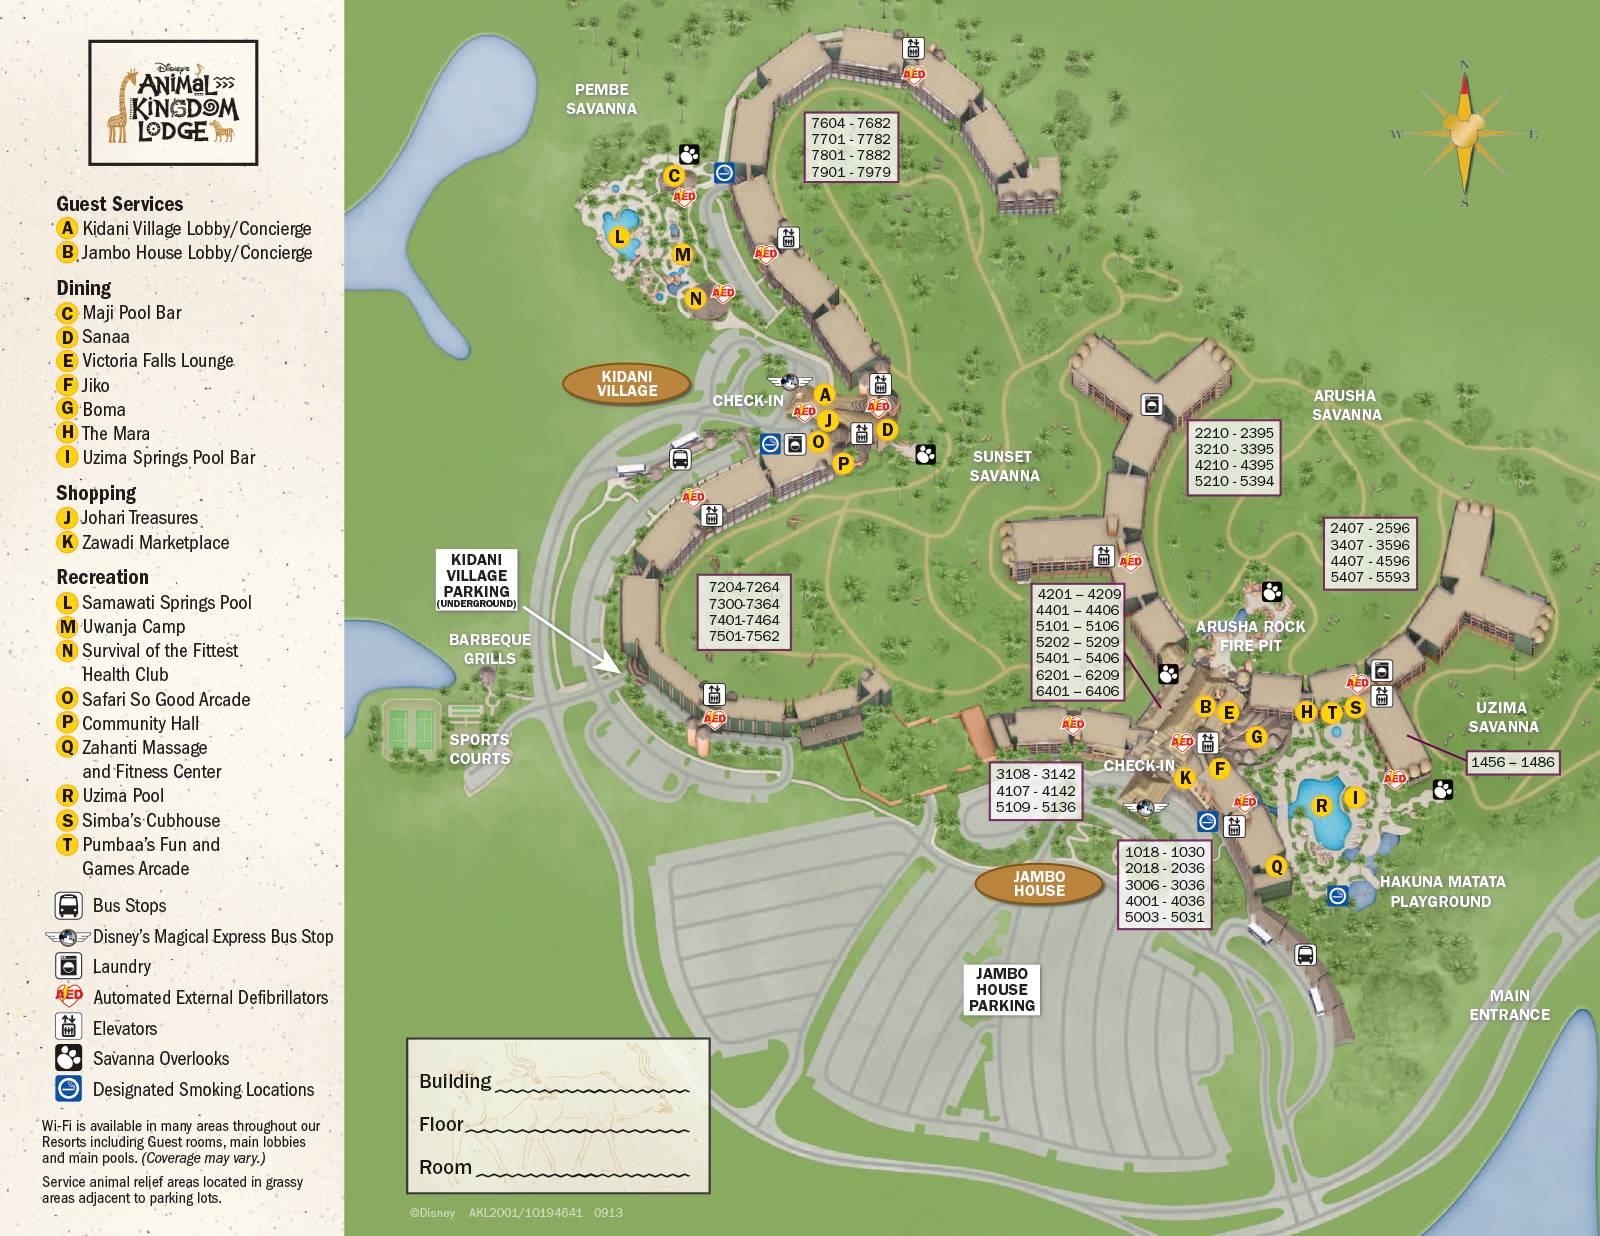 2013 Animal Kingdom Lodge guide map